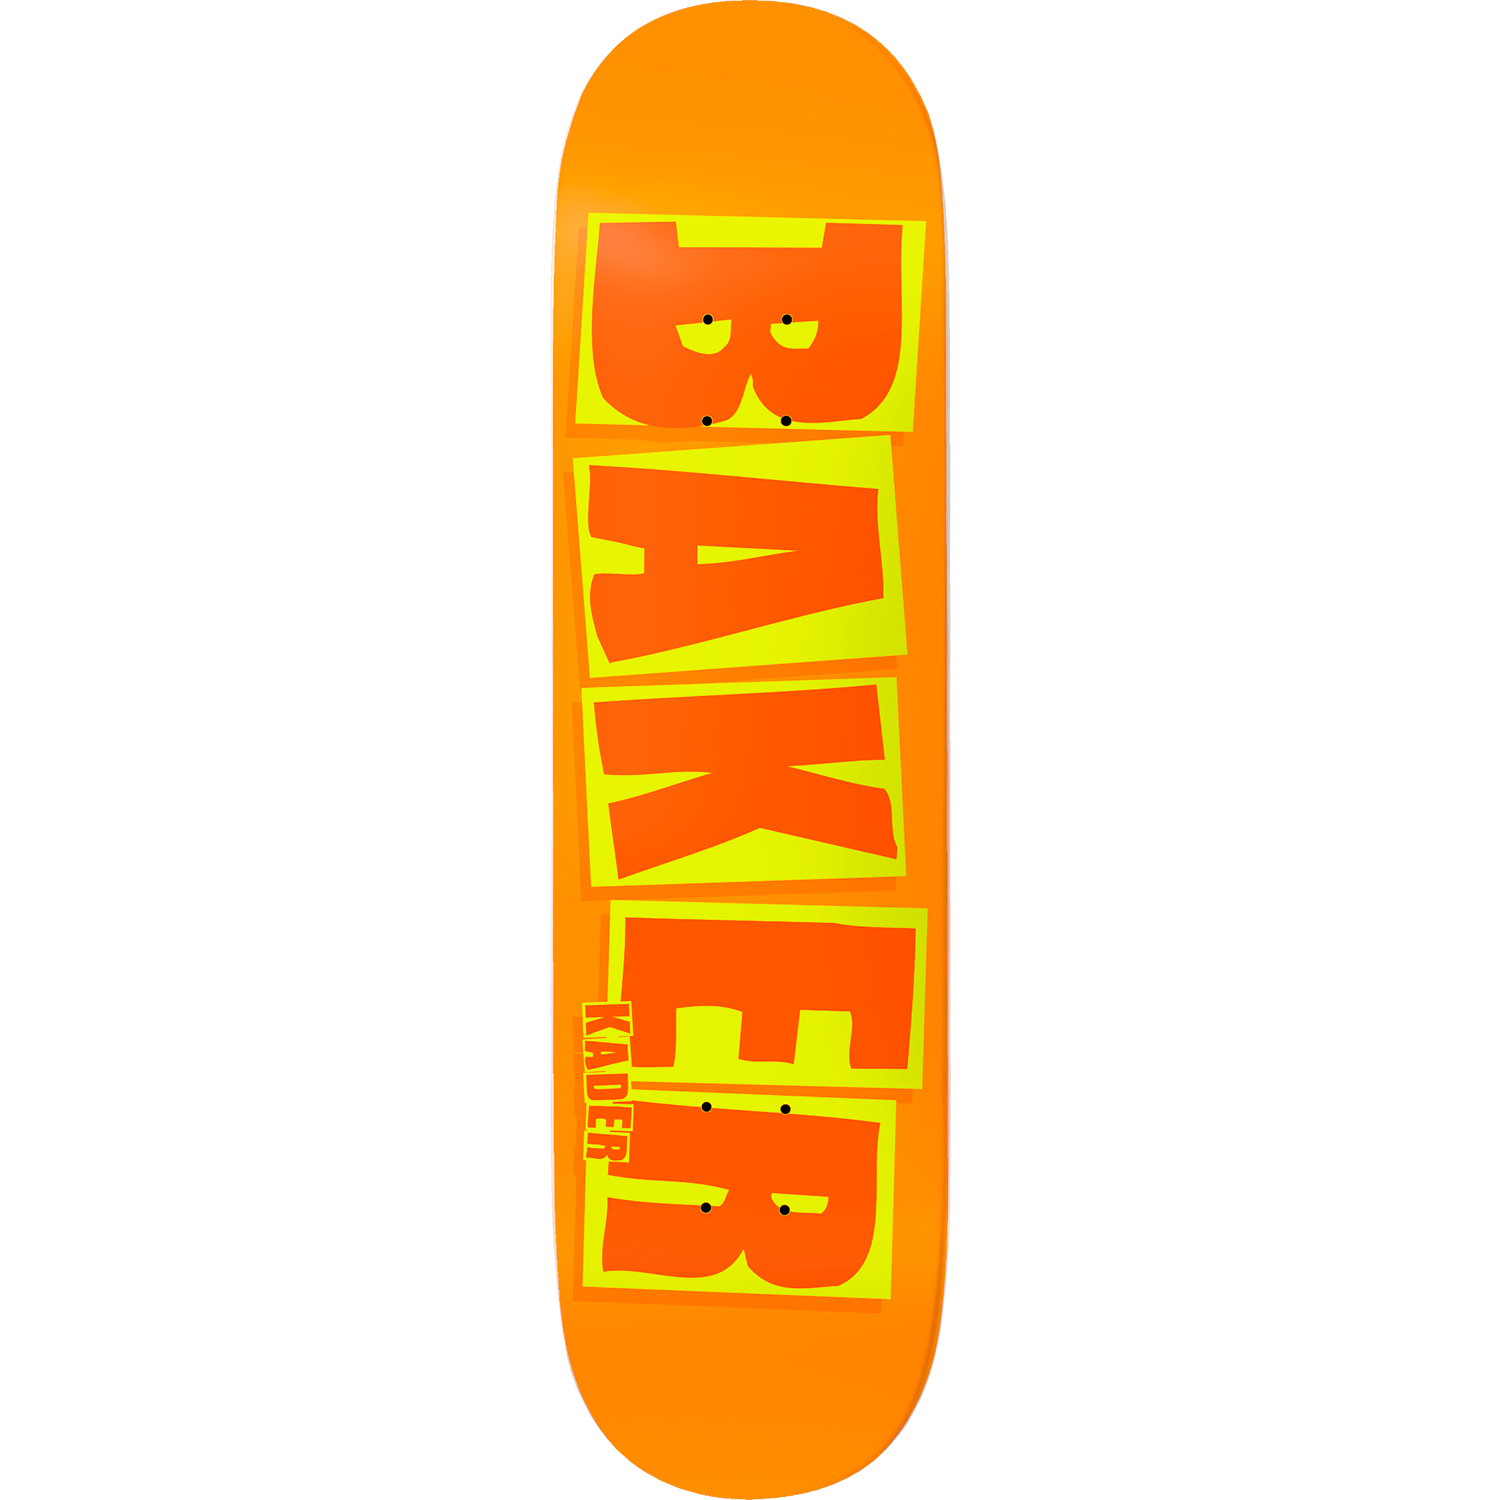 Tabla Baker Kader Brand Name - 8.5''